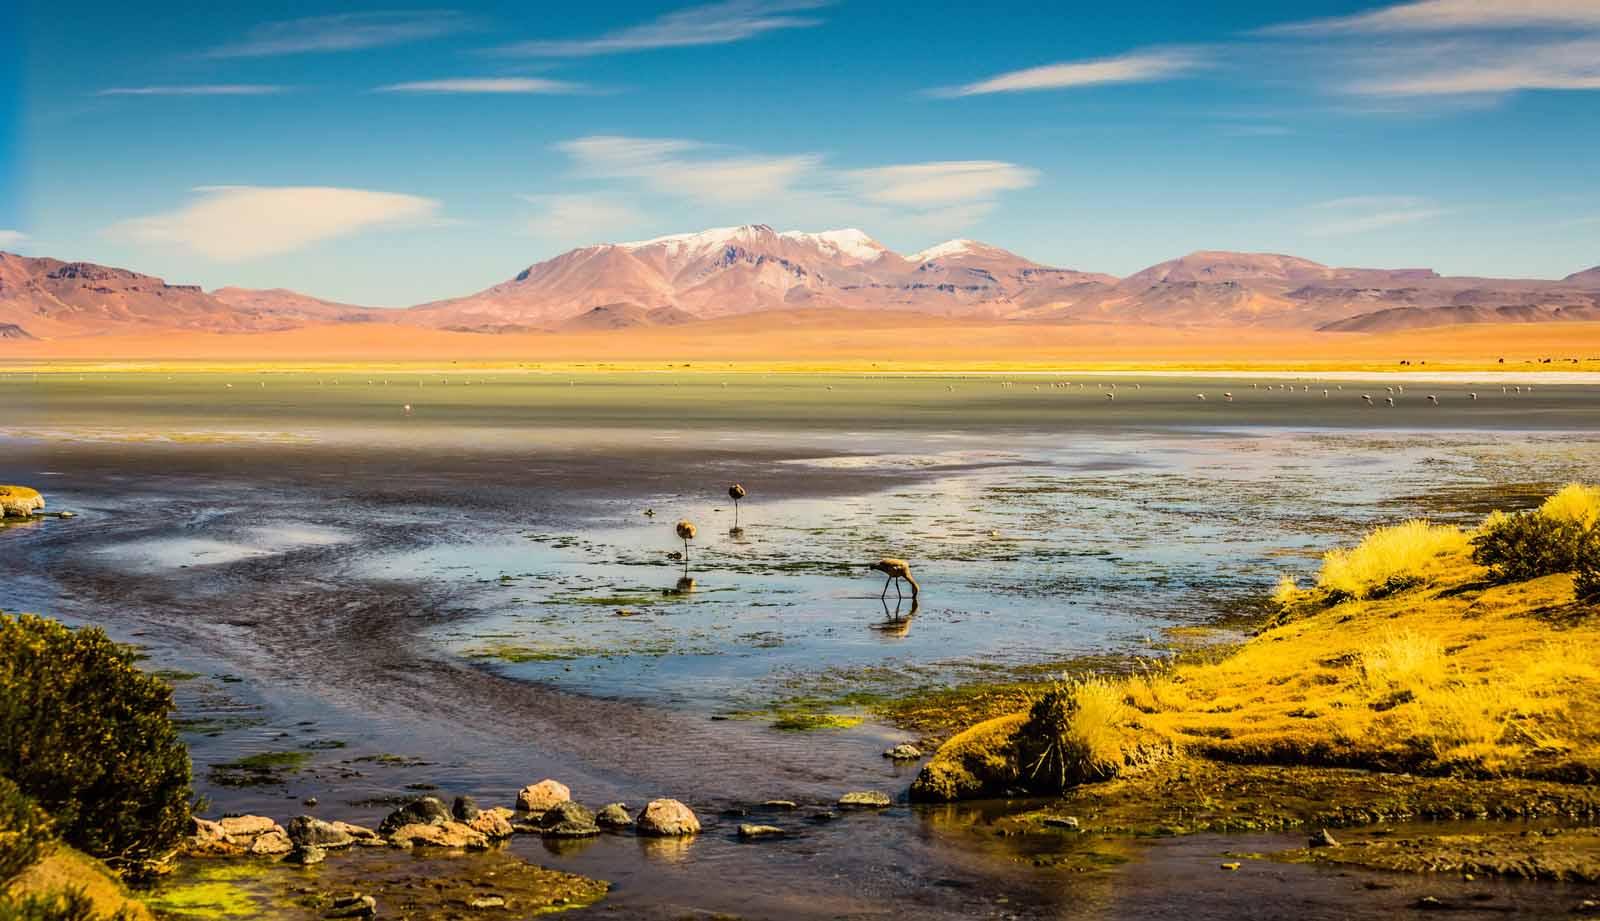 Luxury Travel & Tours in the Atacama Desert